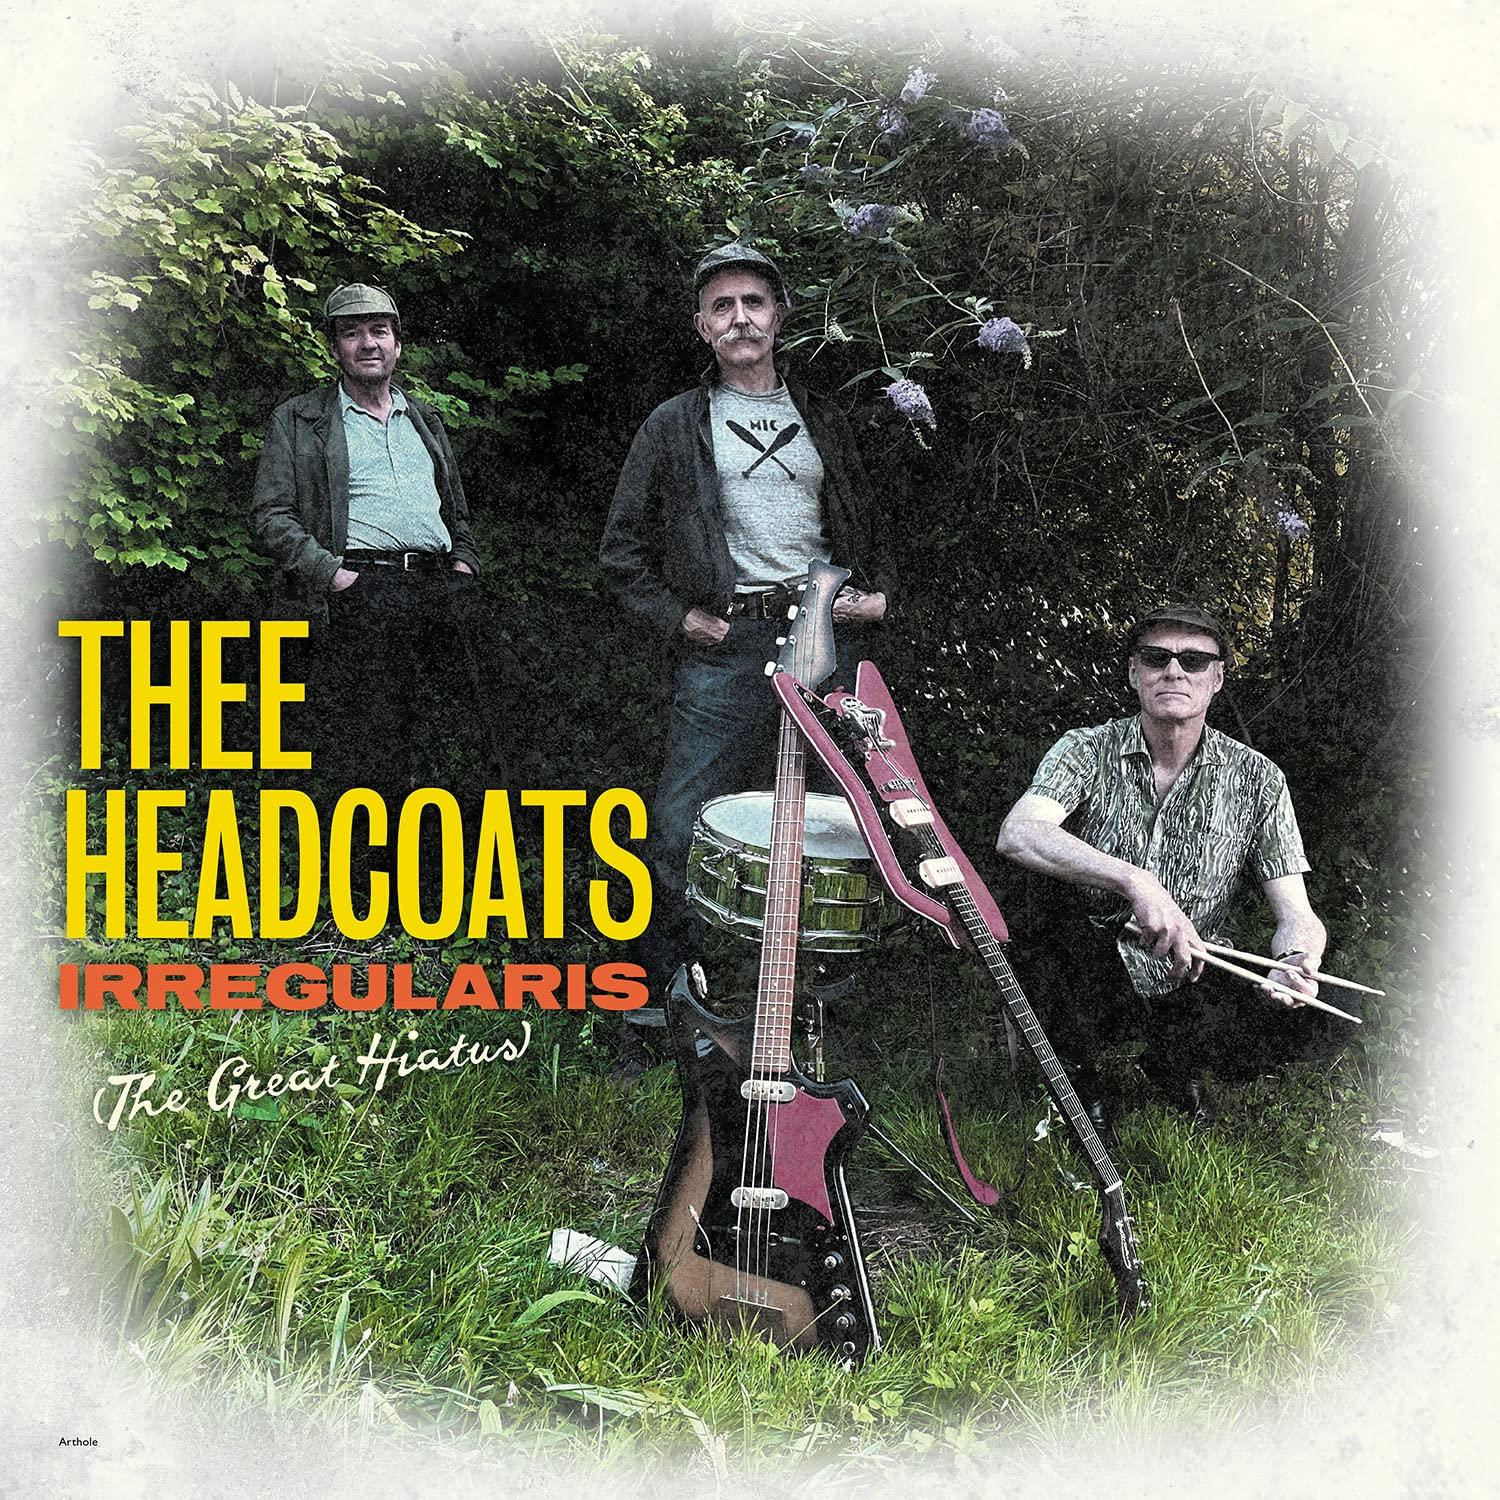 Thee Headcoats - Irregularis (CD) - Hiatus) (The Great